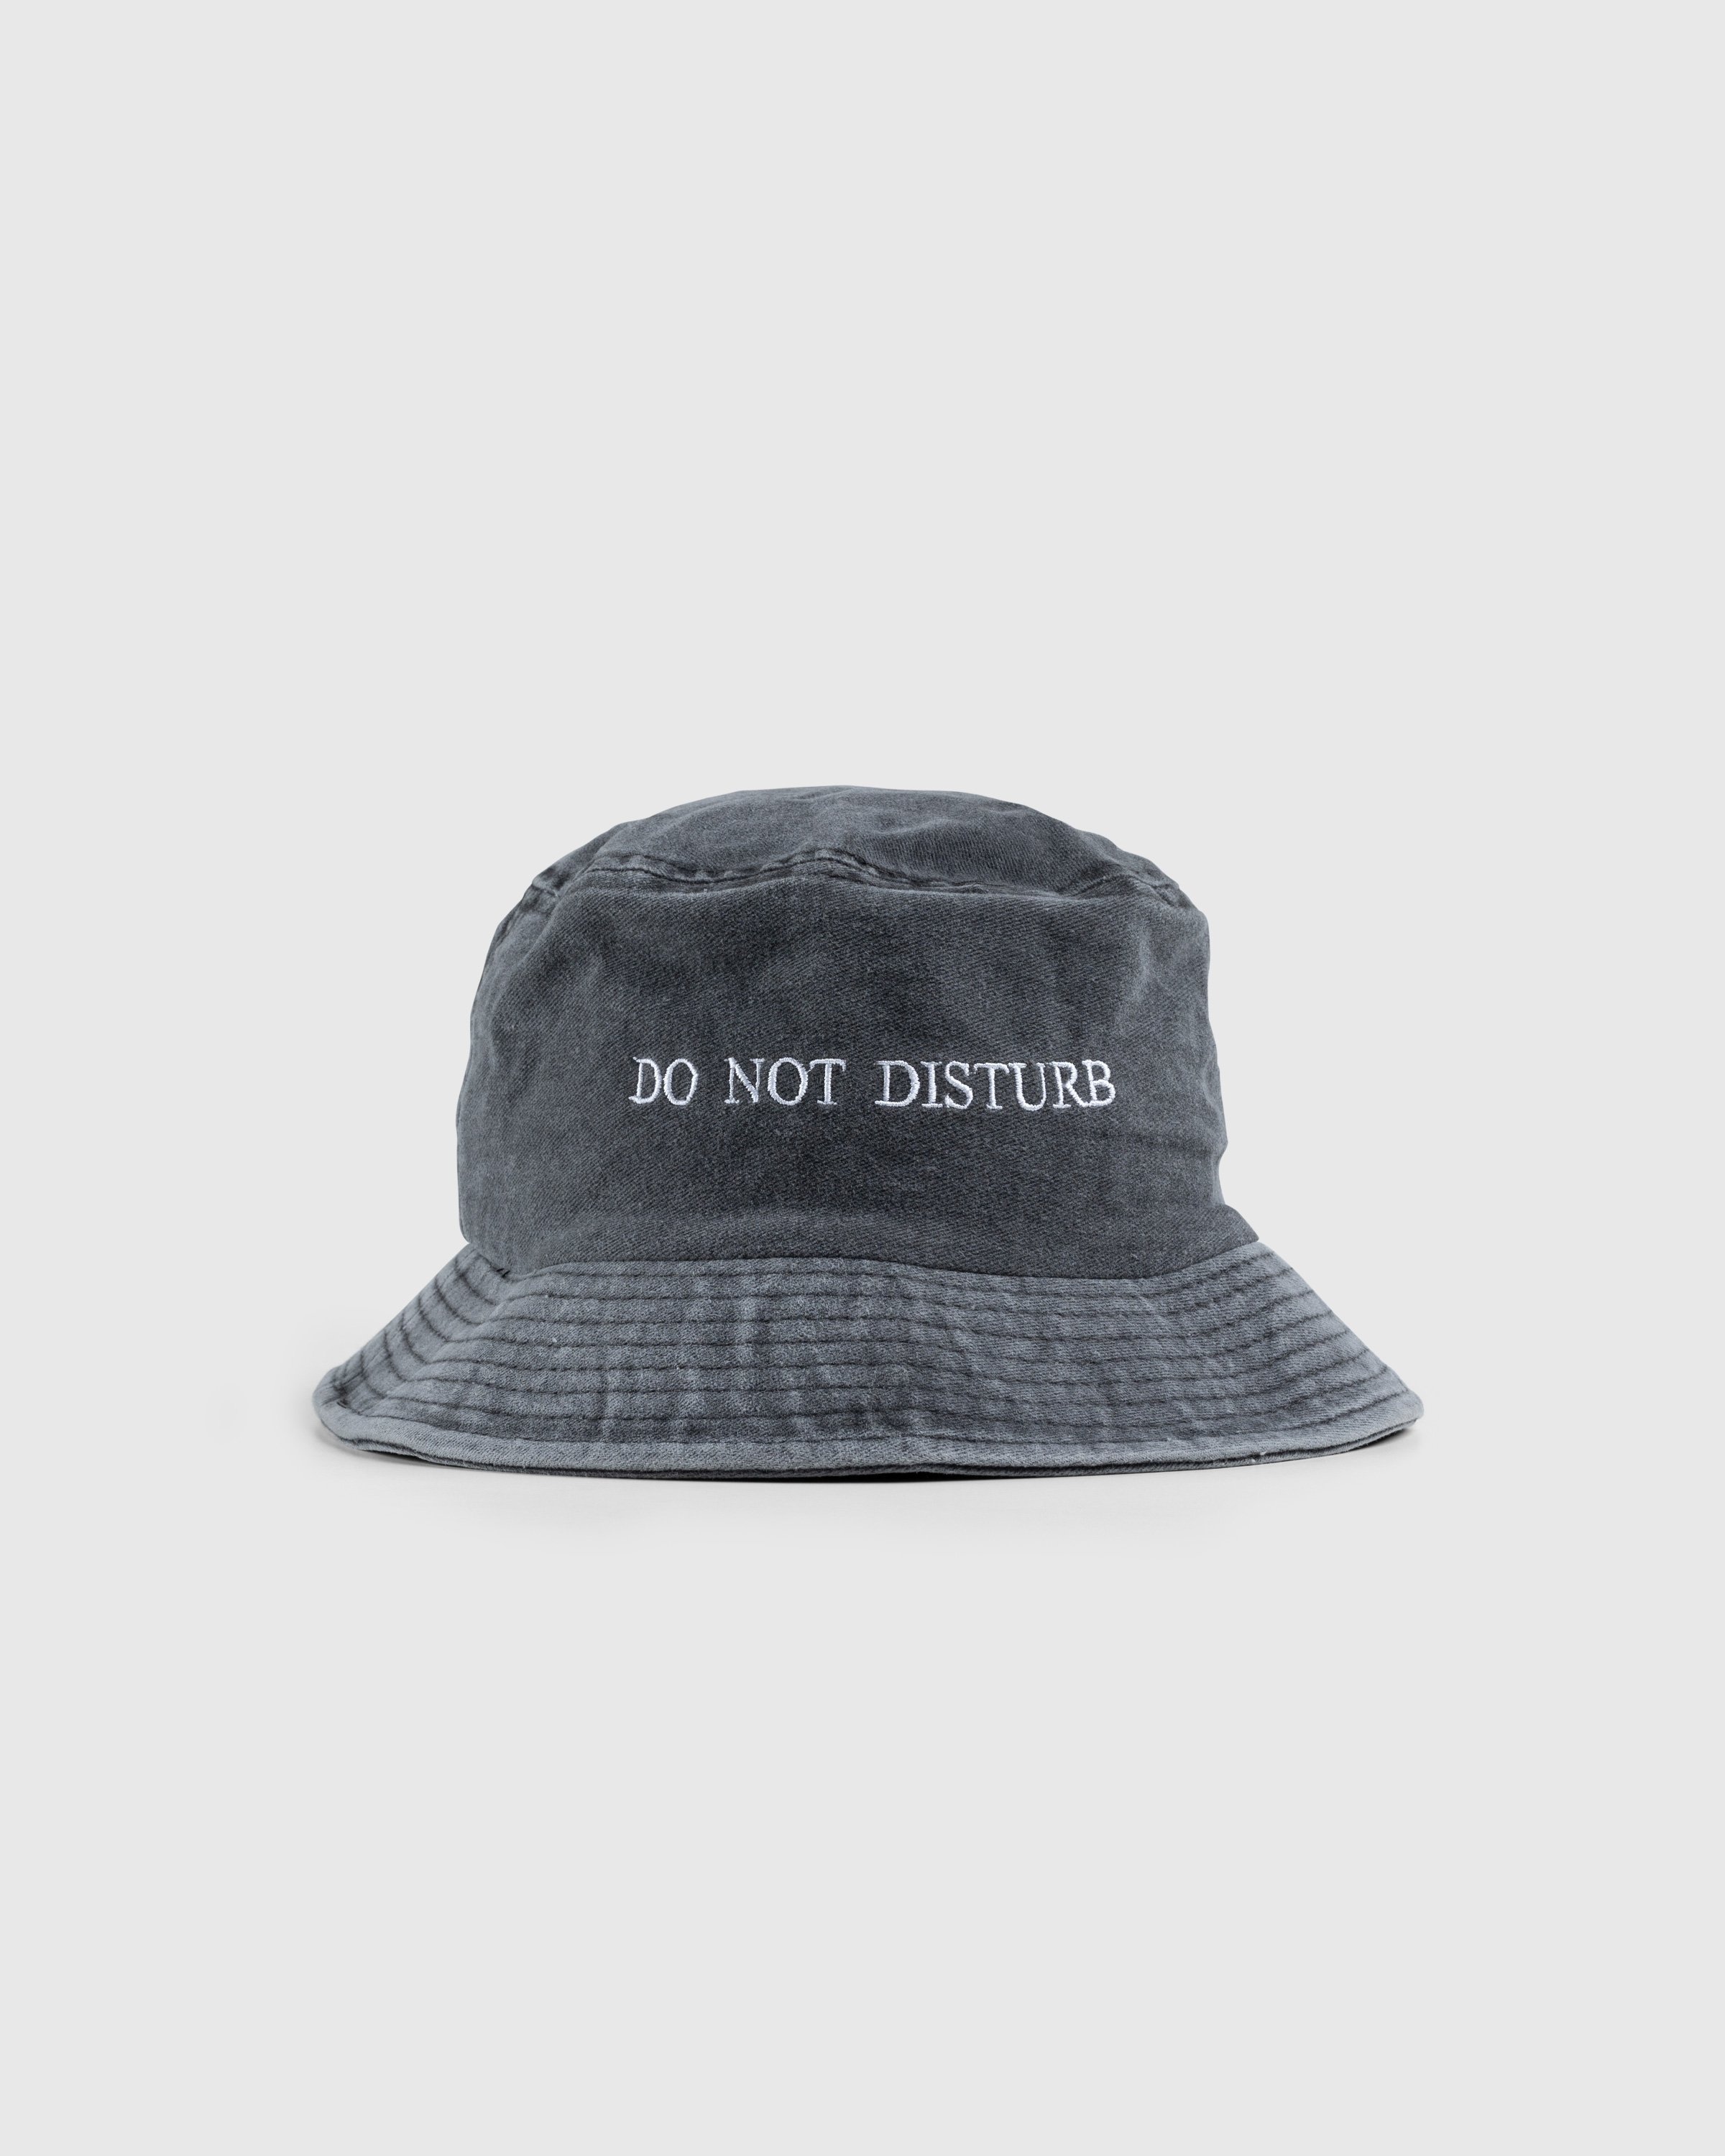 HO HO COCO - Do Not Disturb Bucket Hat Black - Hats - Black - Image 2